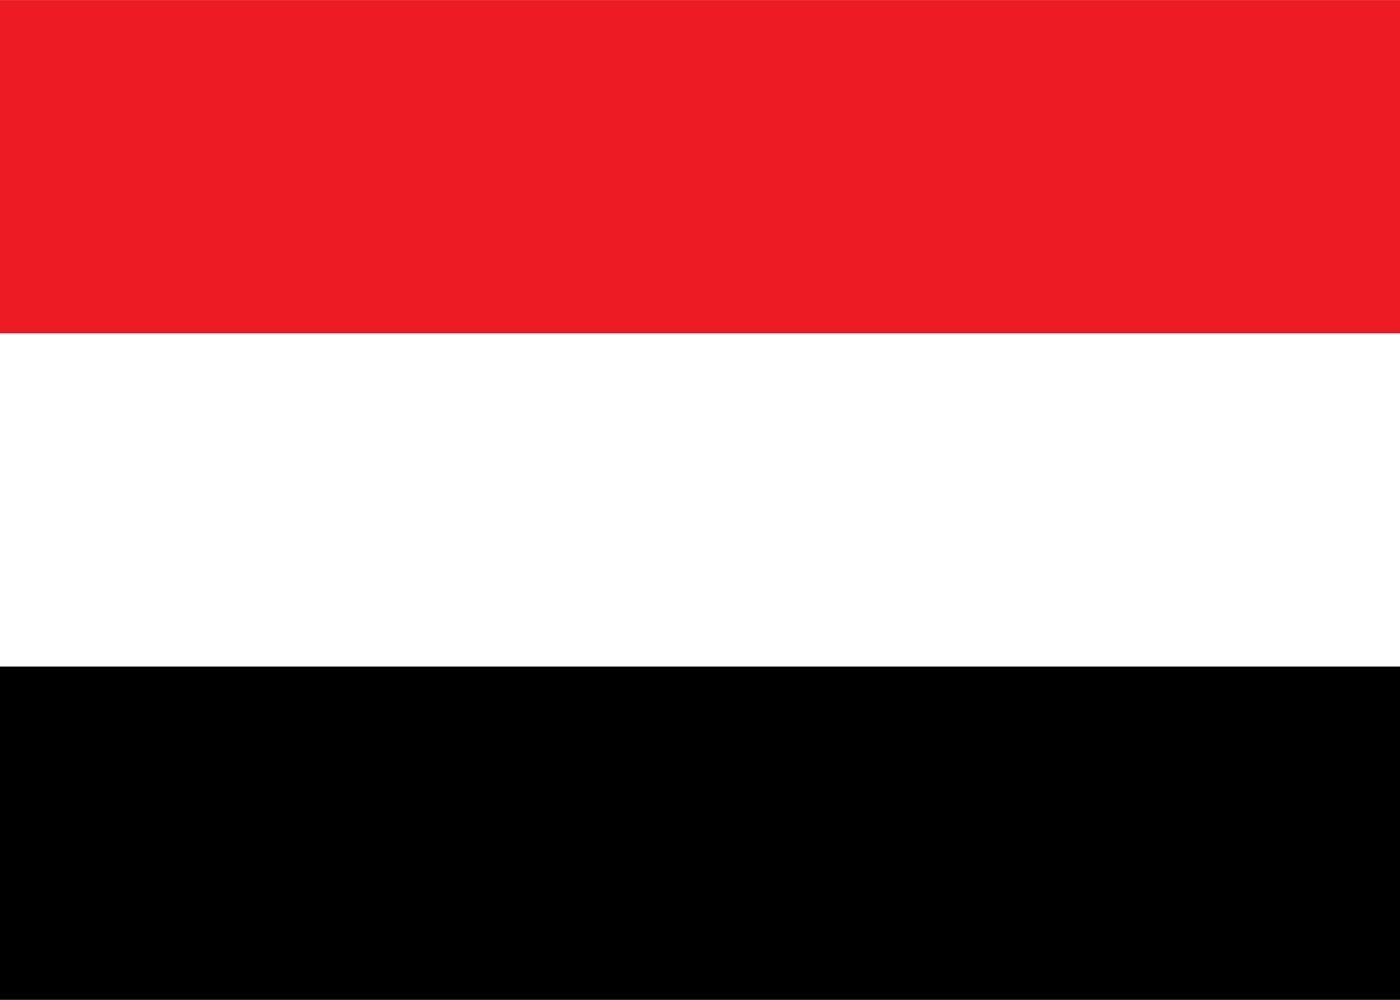 Yemeni flag picture